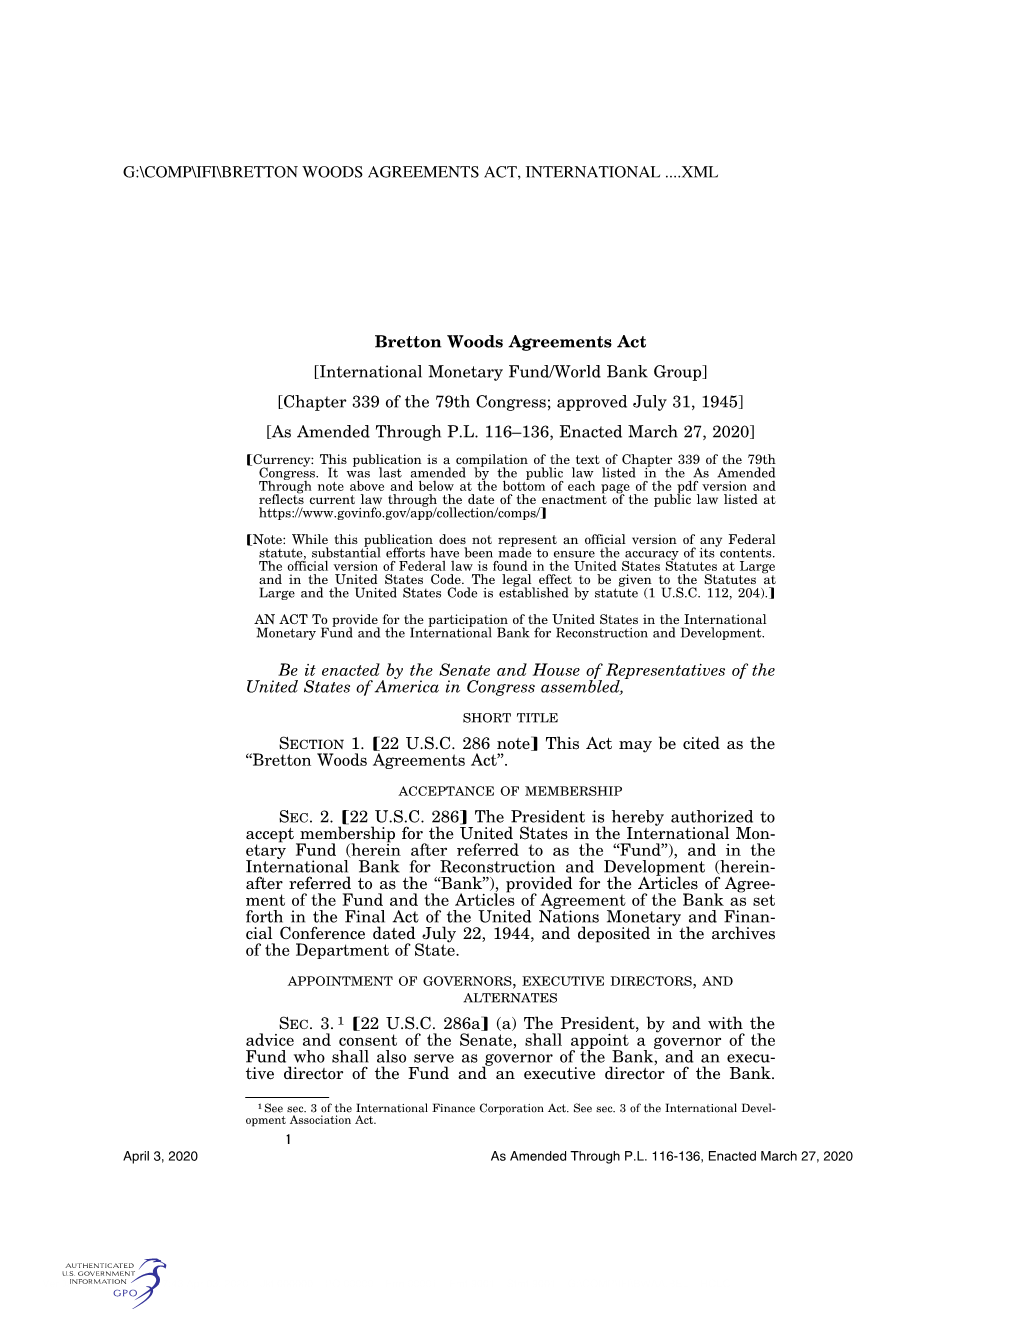 Bretton Woods Agreements Act, International ....Xml